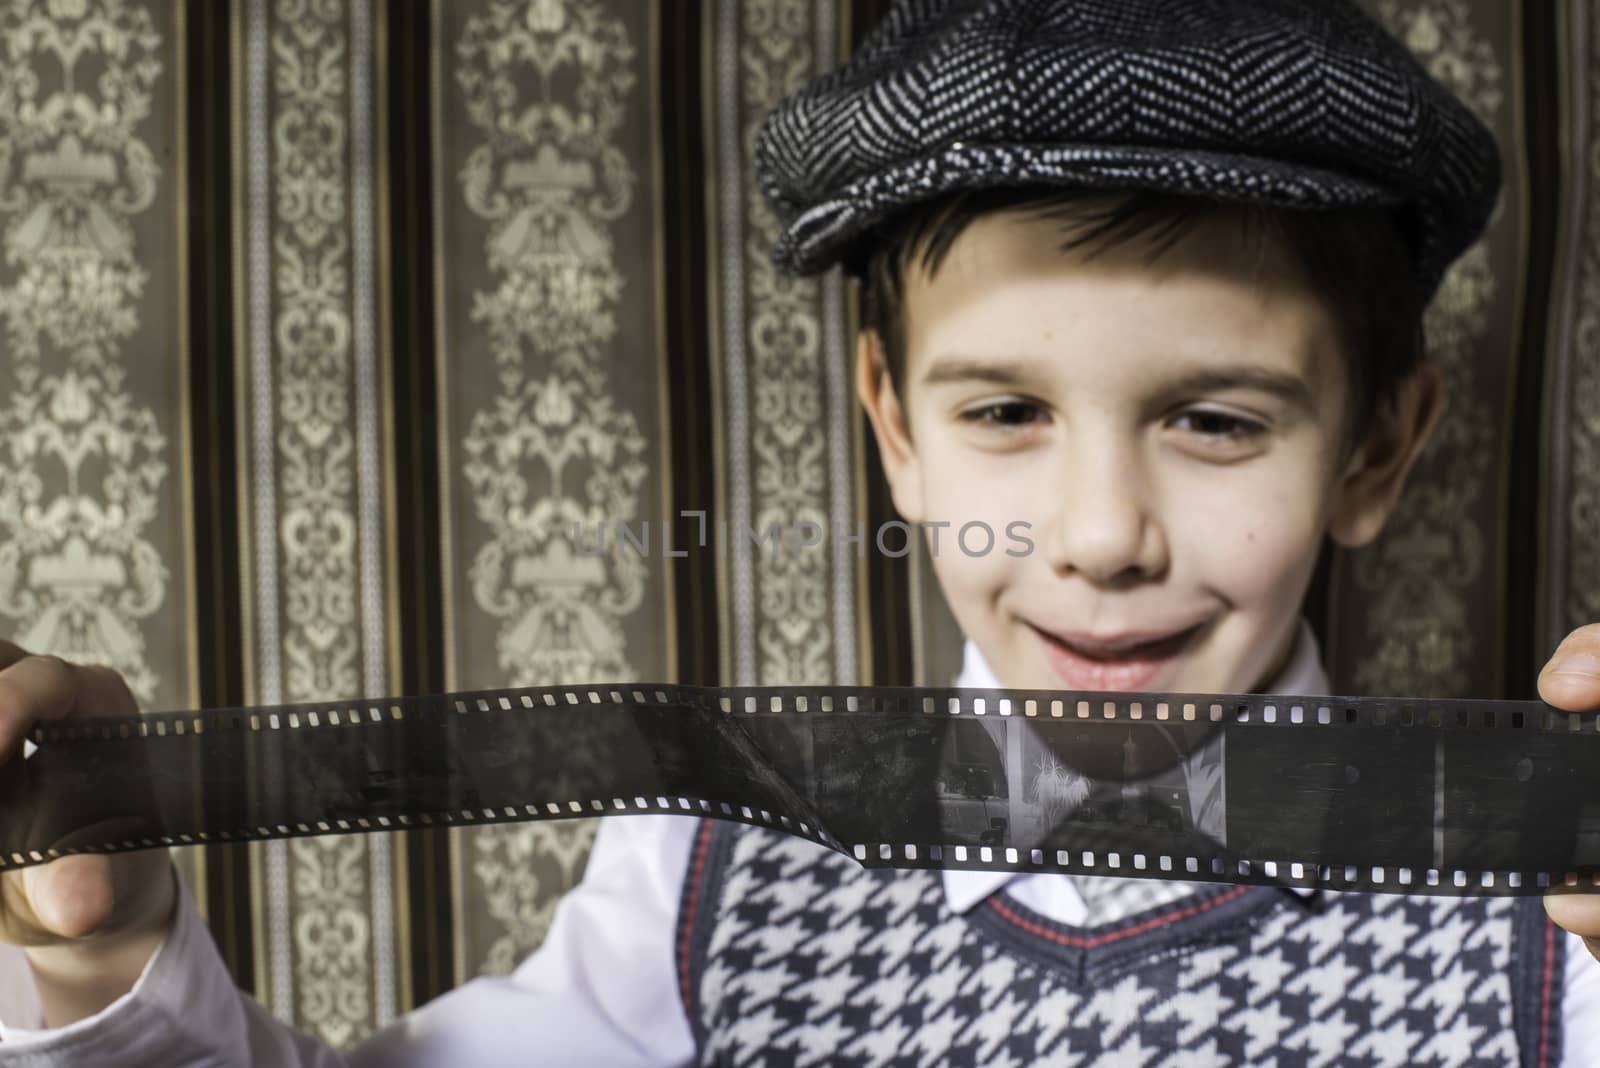 Child considered analog photographic film by deyan_georgiev